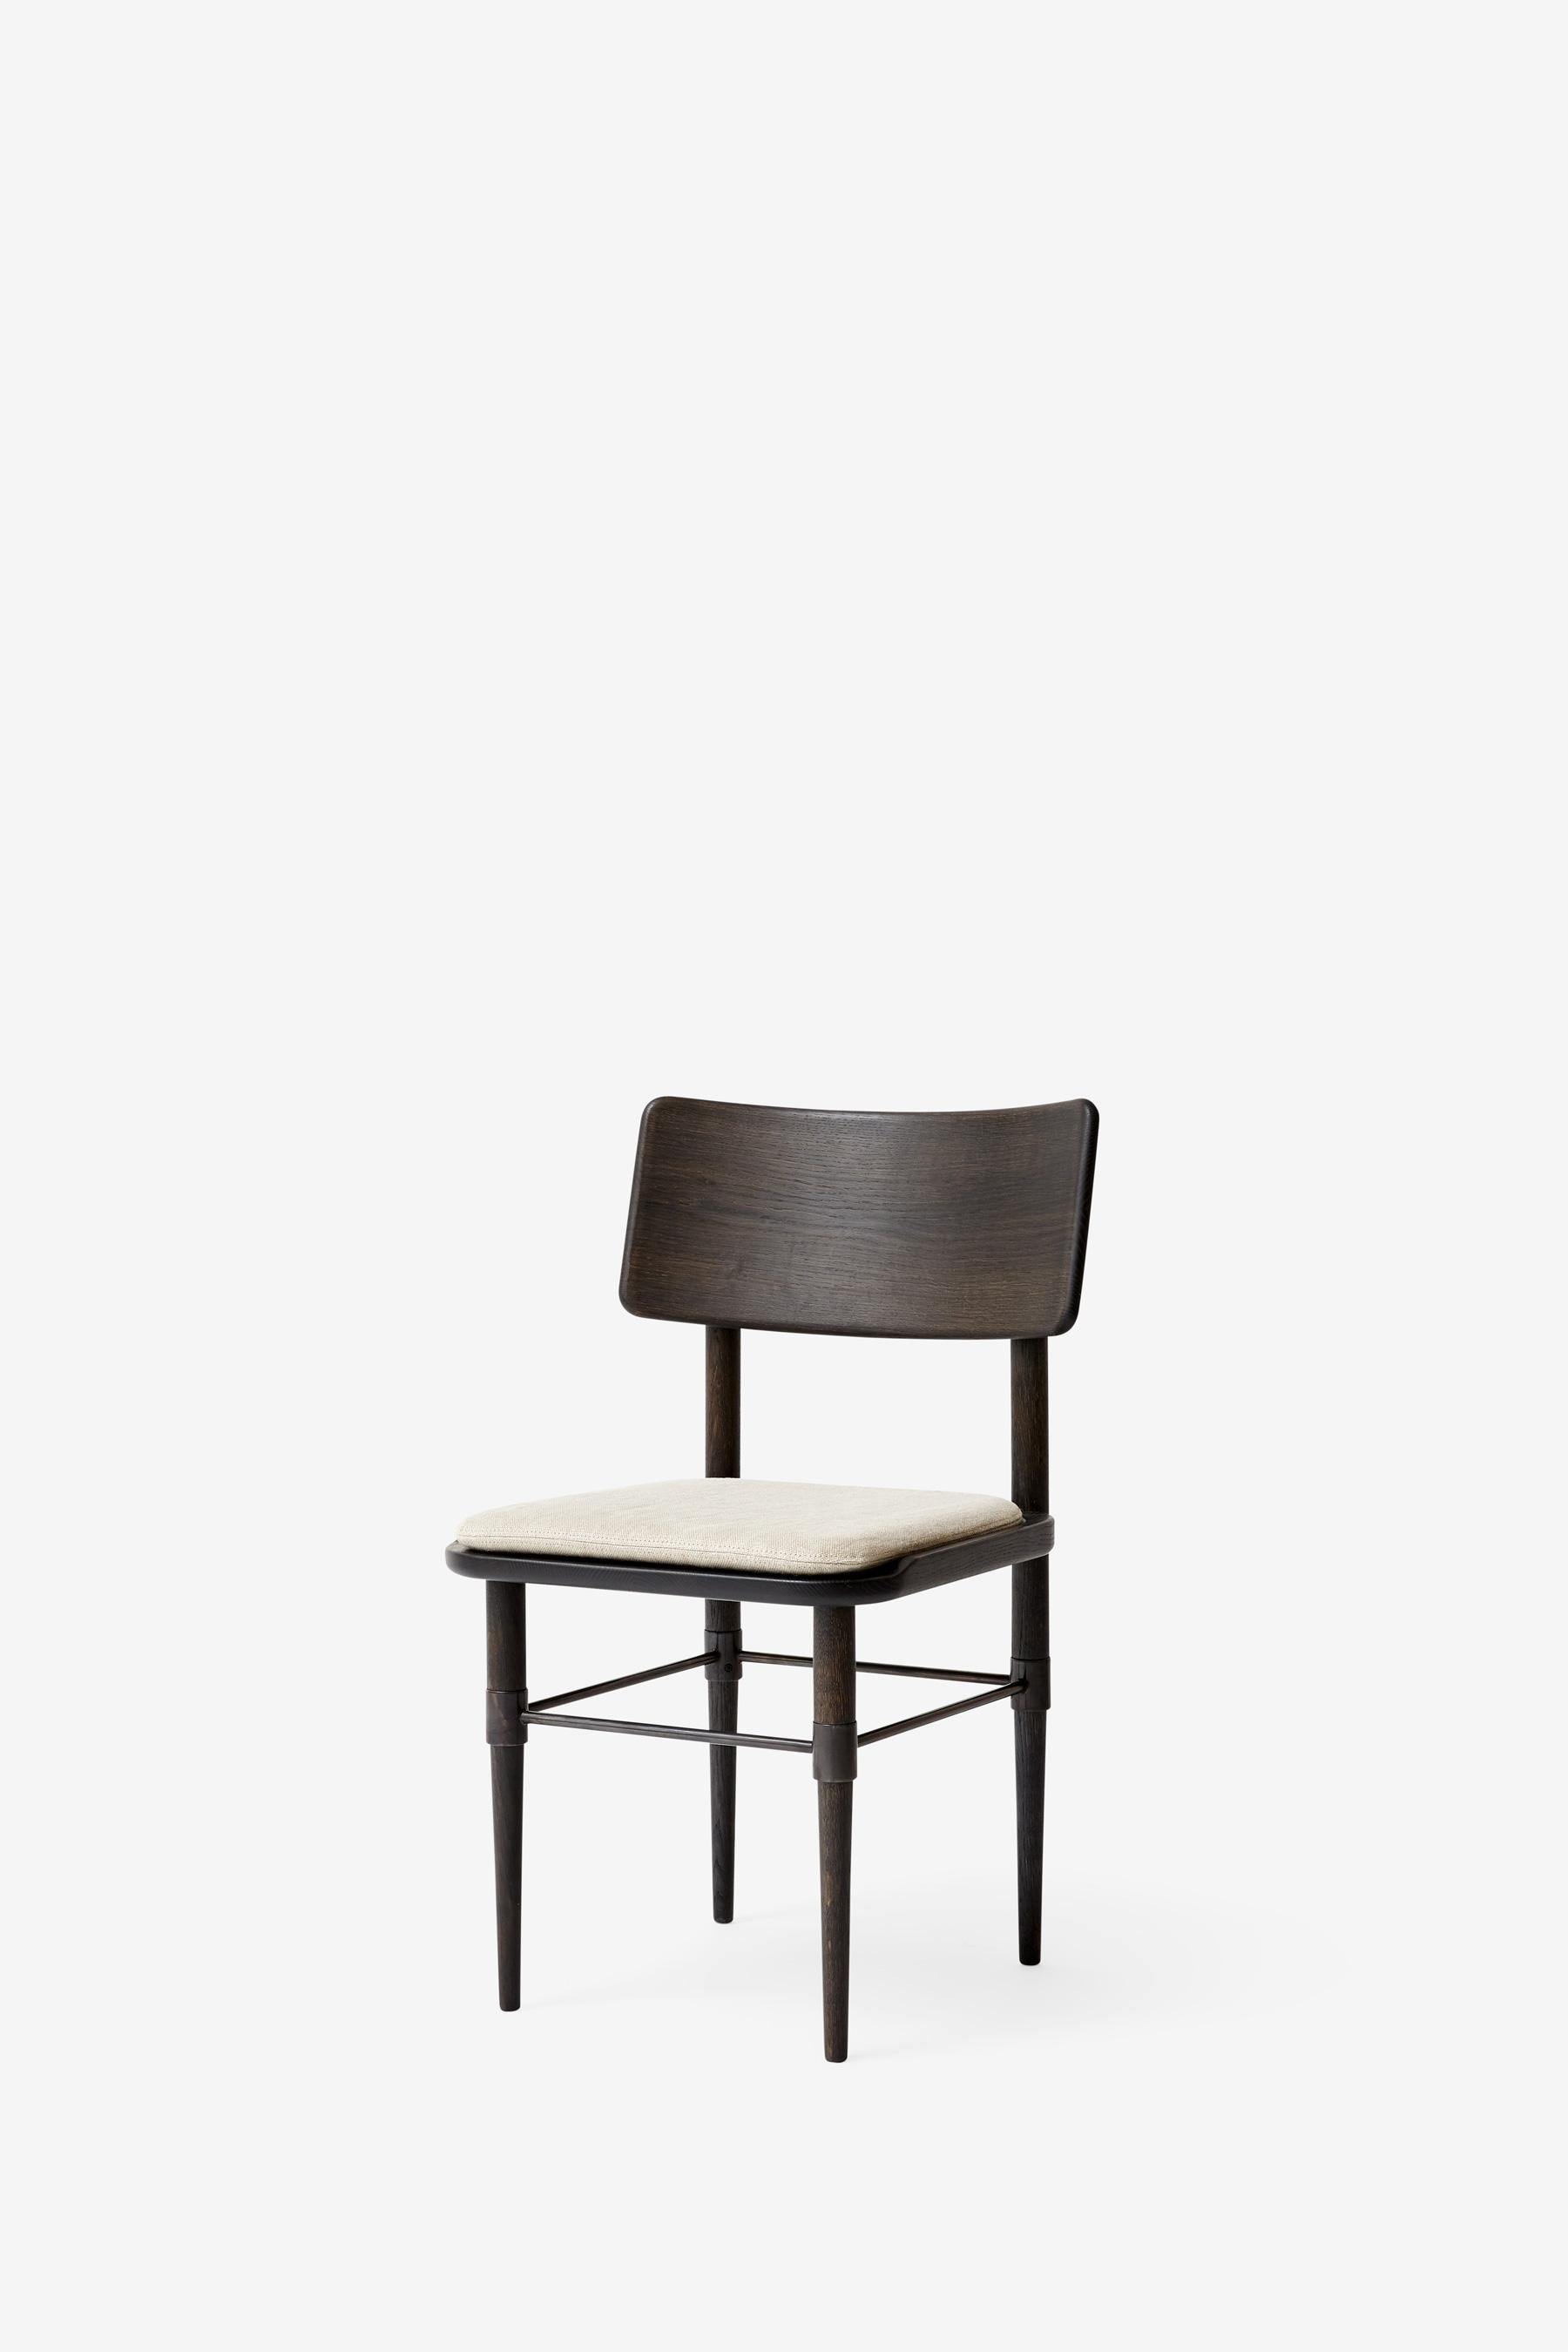 MG101 Dining chair in dark oak by Malte Gormsen Design by Space Copenhagen For Sale 2